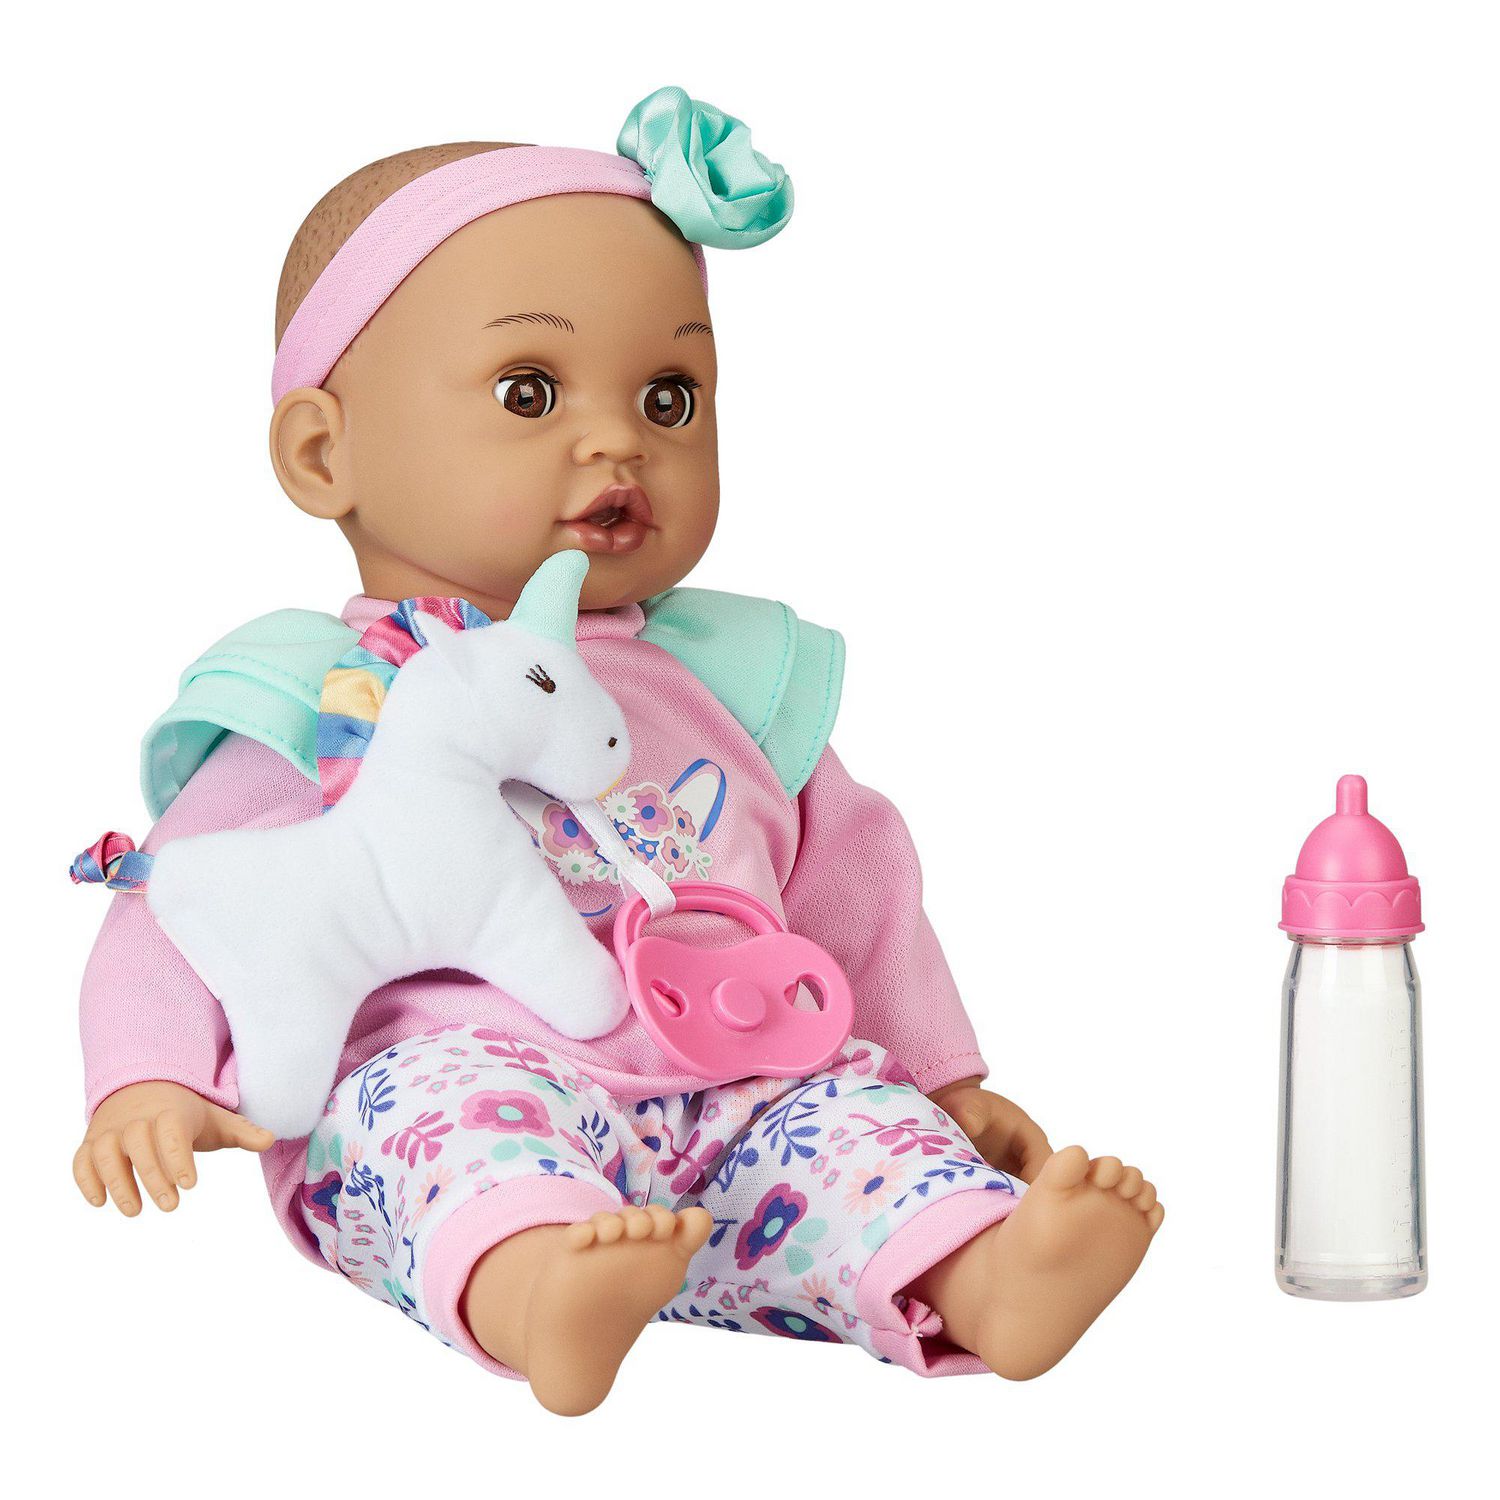 Lolmot Baby Toys Newborn Childrens Intelligent Simulation Baby Washing Toy  Soft Play House 